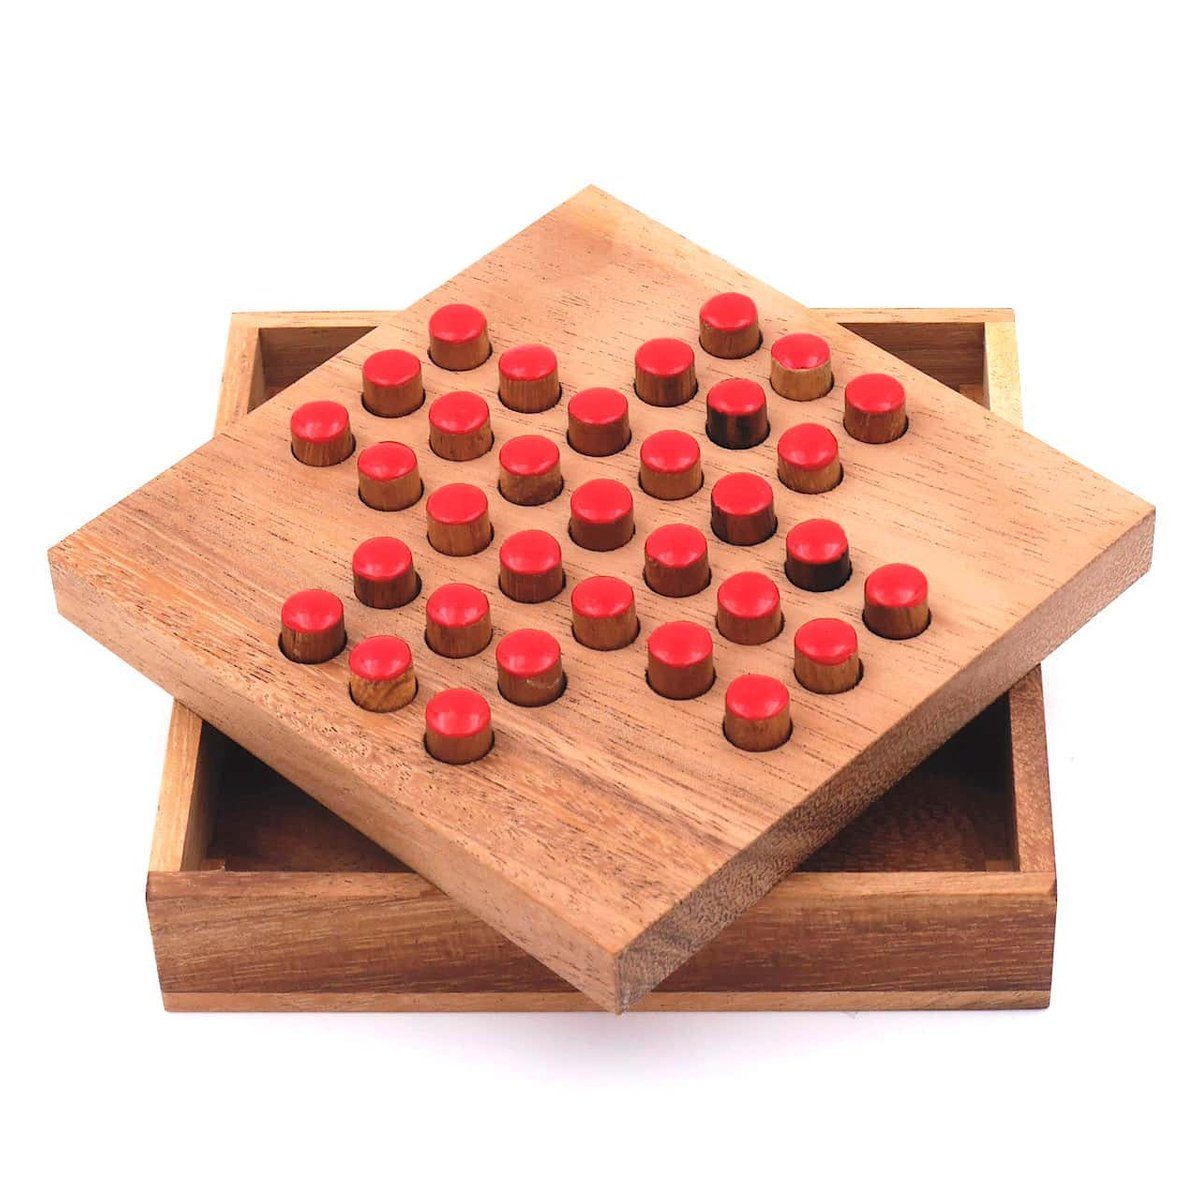 Holzspiel Spiel, - ROMBOL Holz, rot Steckspiel Solitaire Klassiker Denkspiele unterhaltsamer edlem aus